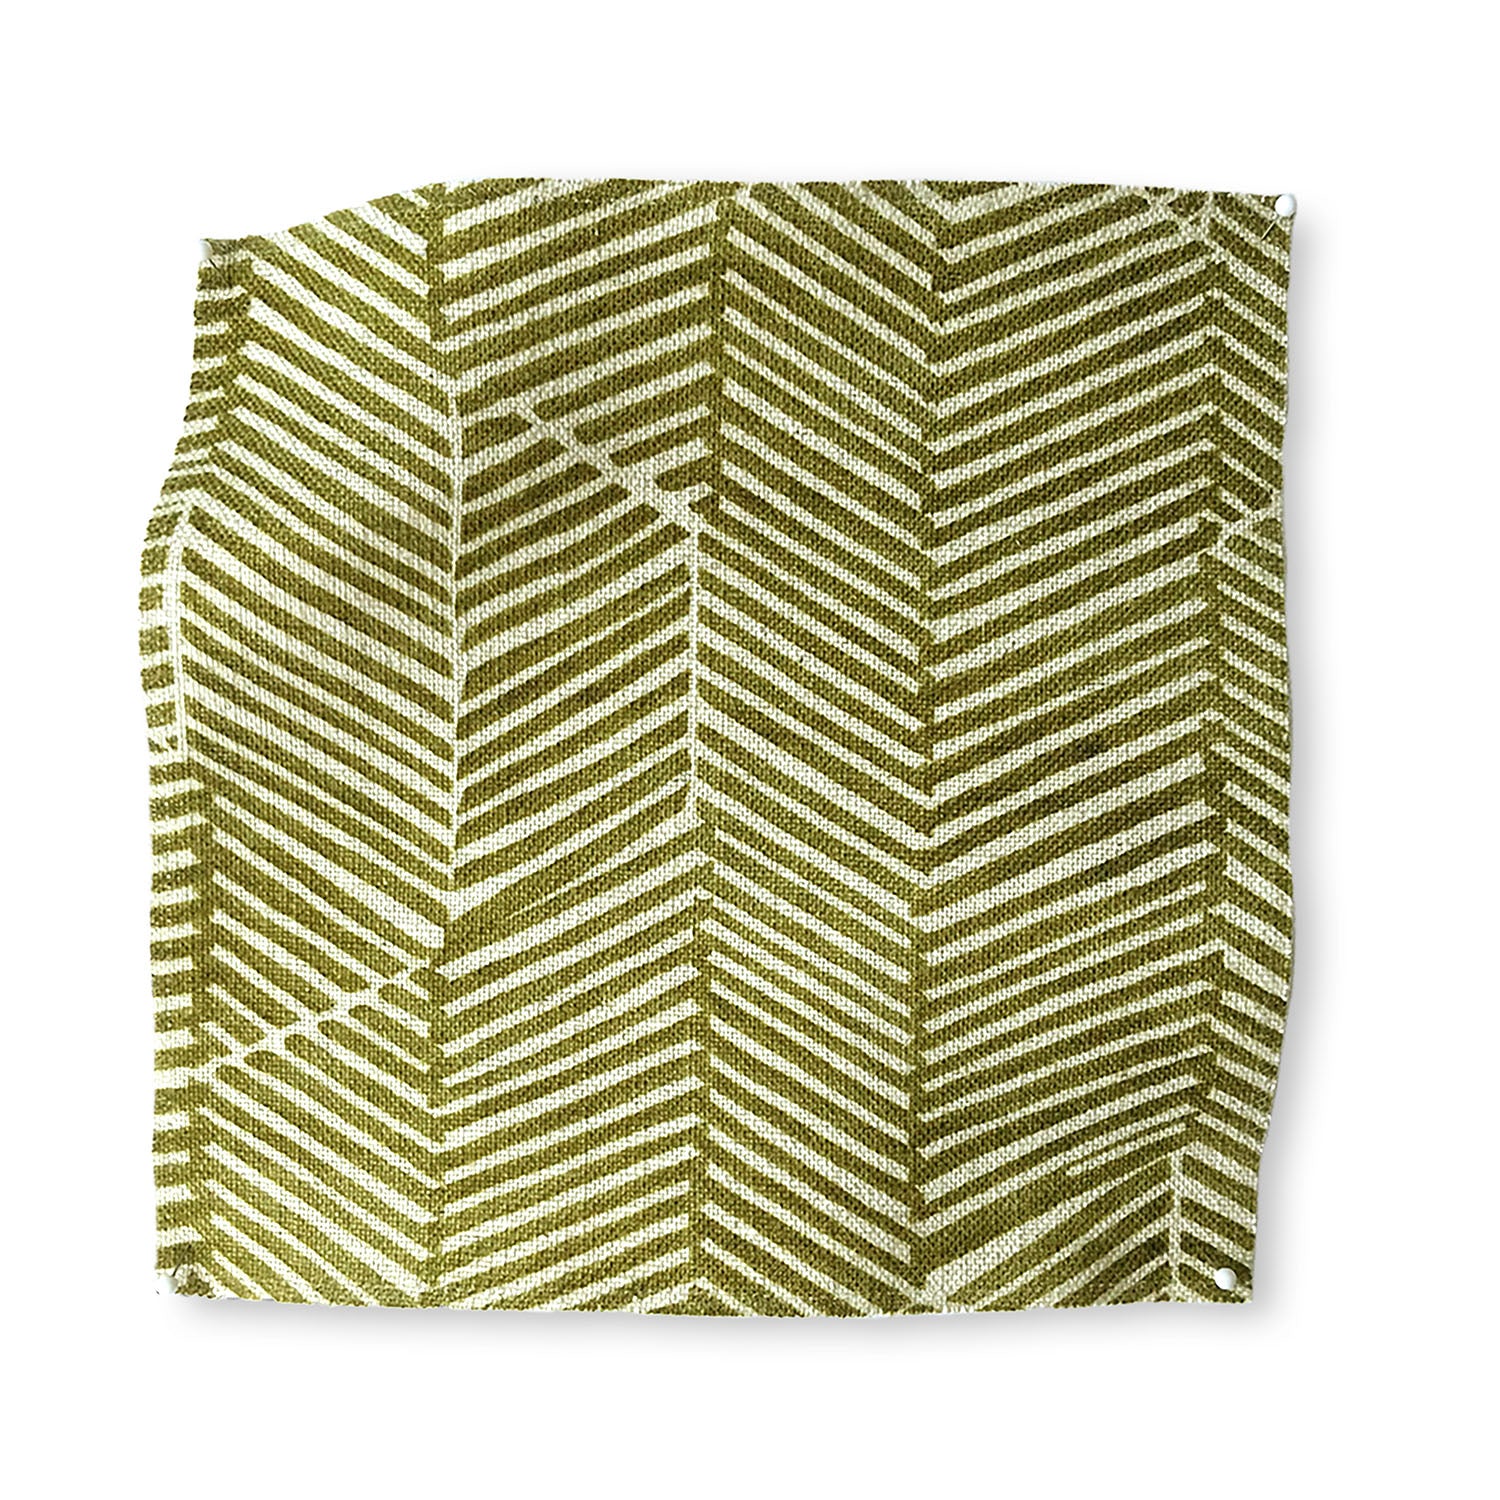 Square fabric swatch in a dense herringbone print in olive on a tan field.